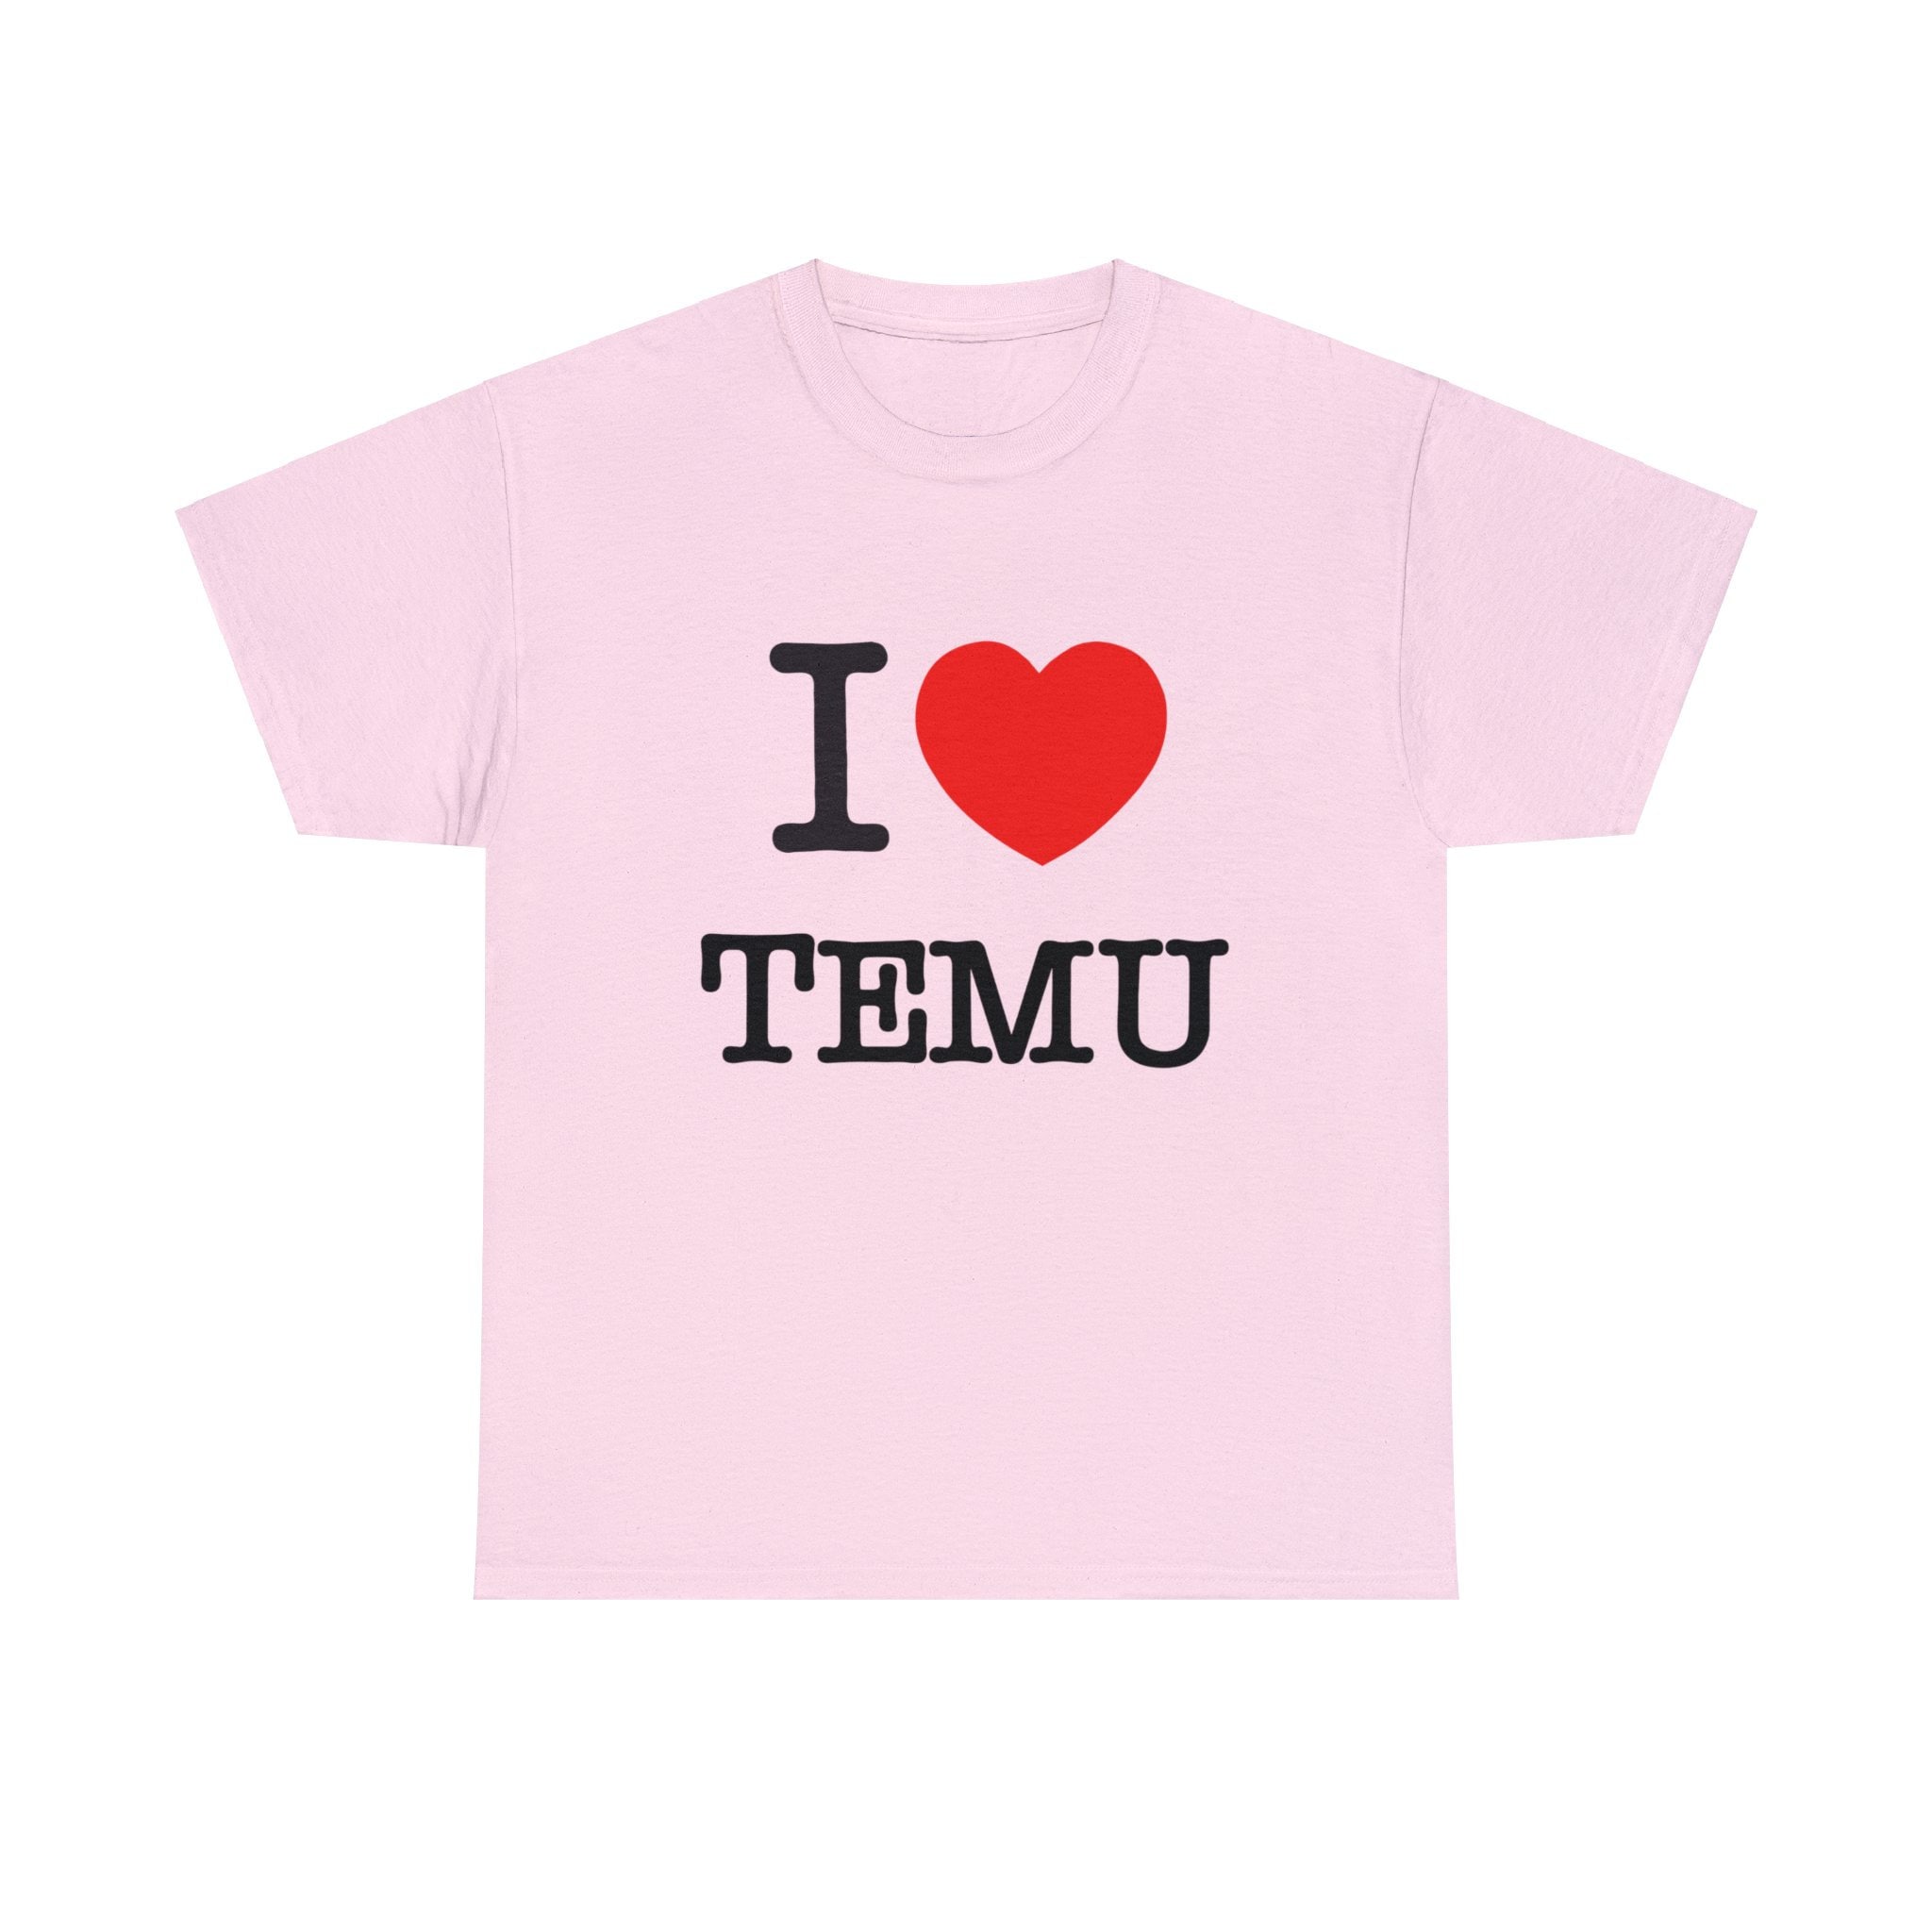 I Heart Temu Shirt 